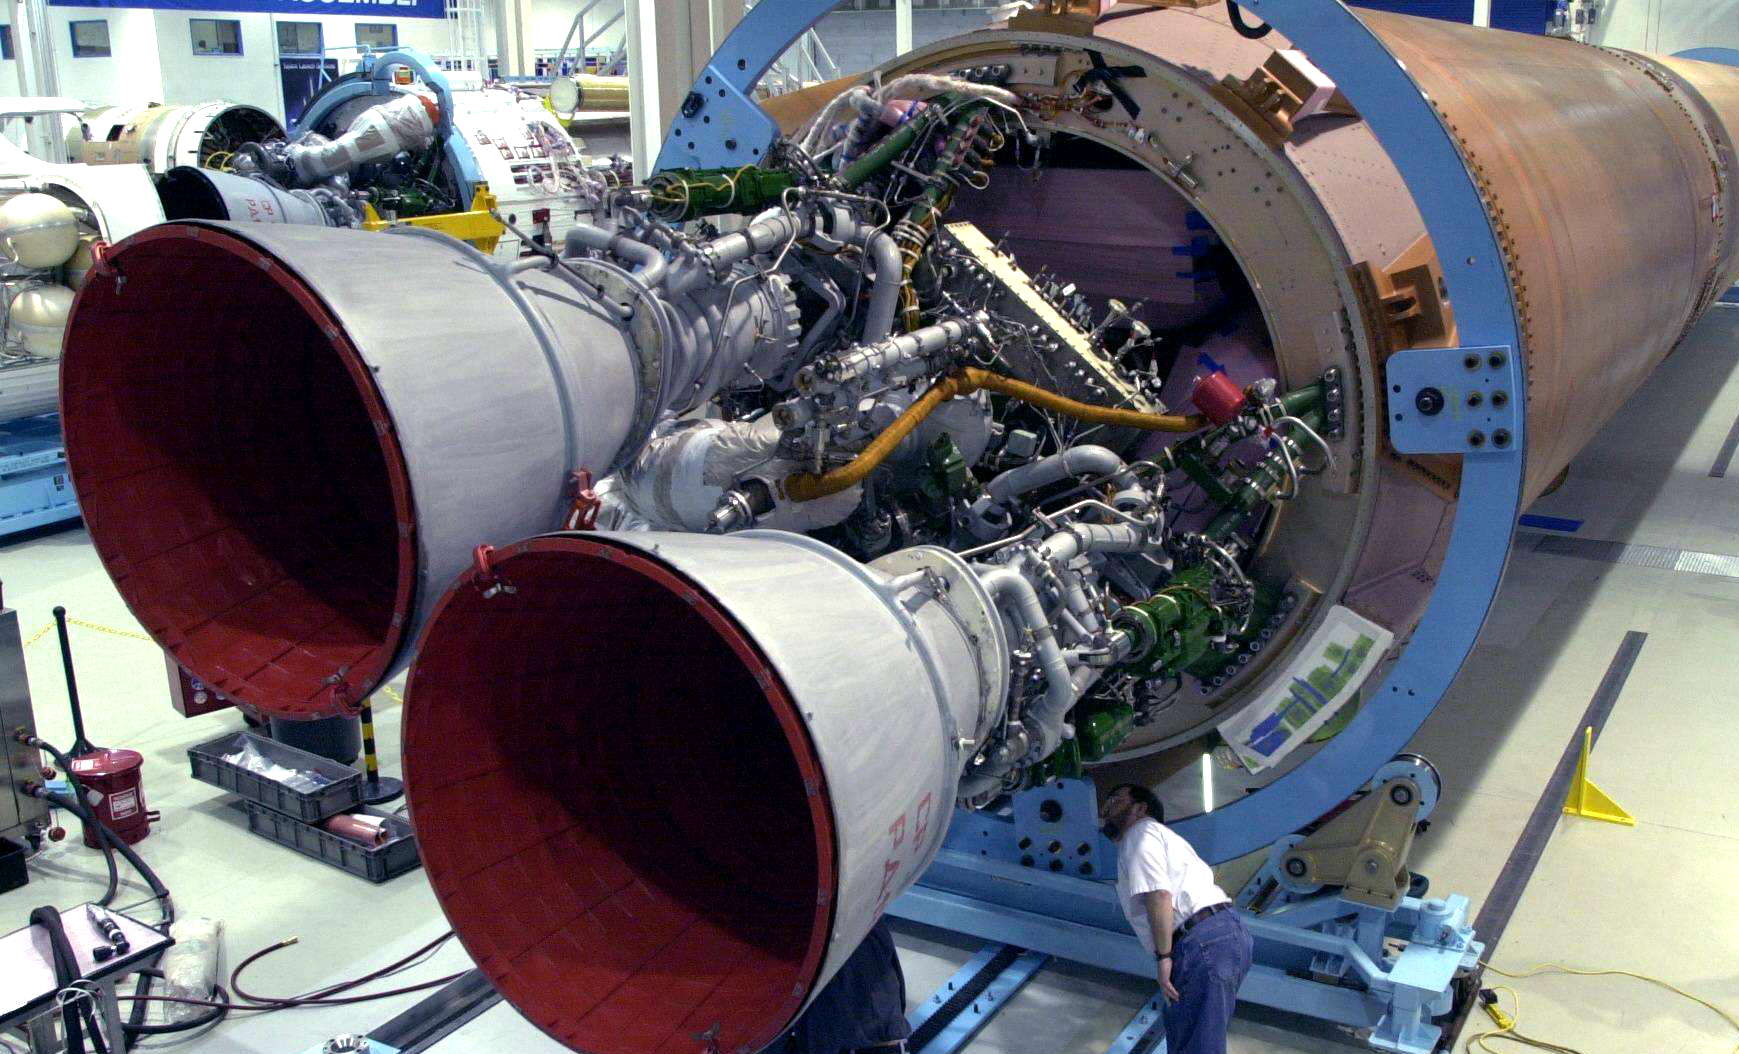 yf480火箭发动机图片